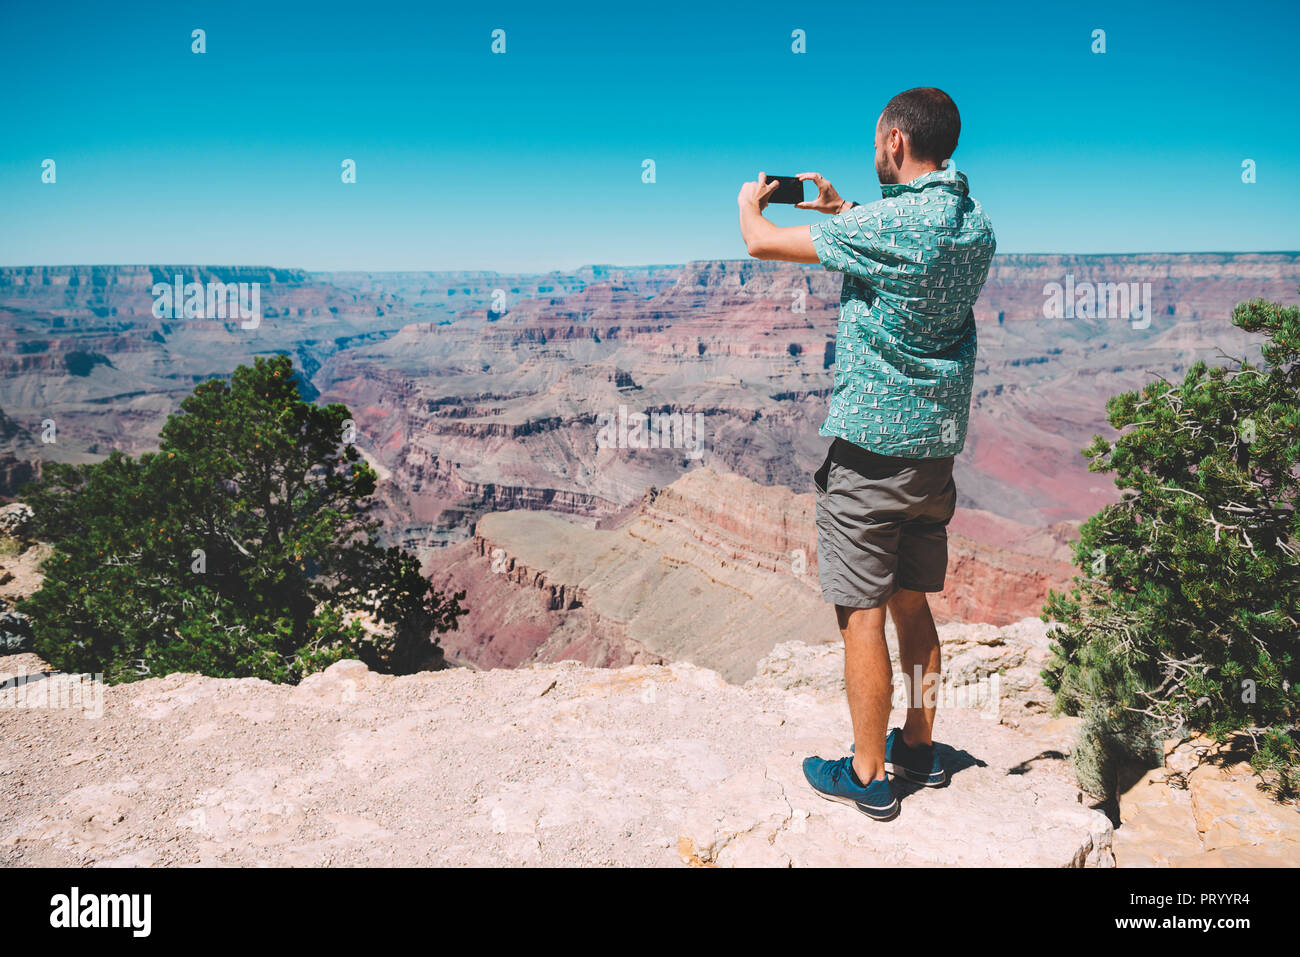 USA, Arizona, der Grand Canyon National Park, Grand Canyon, Mann die Bilder mit Smartphone Stockfoto